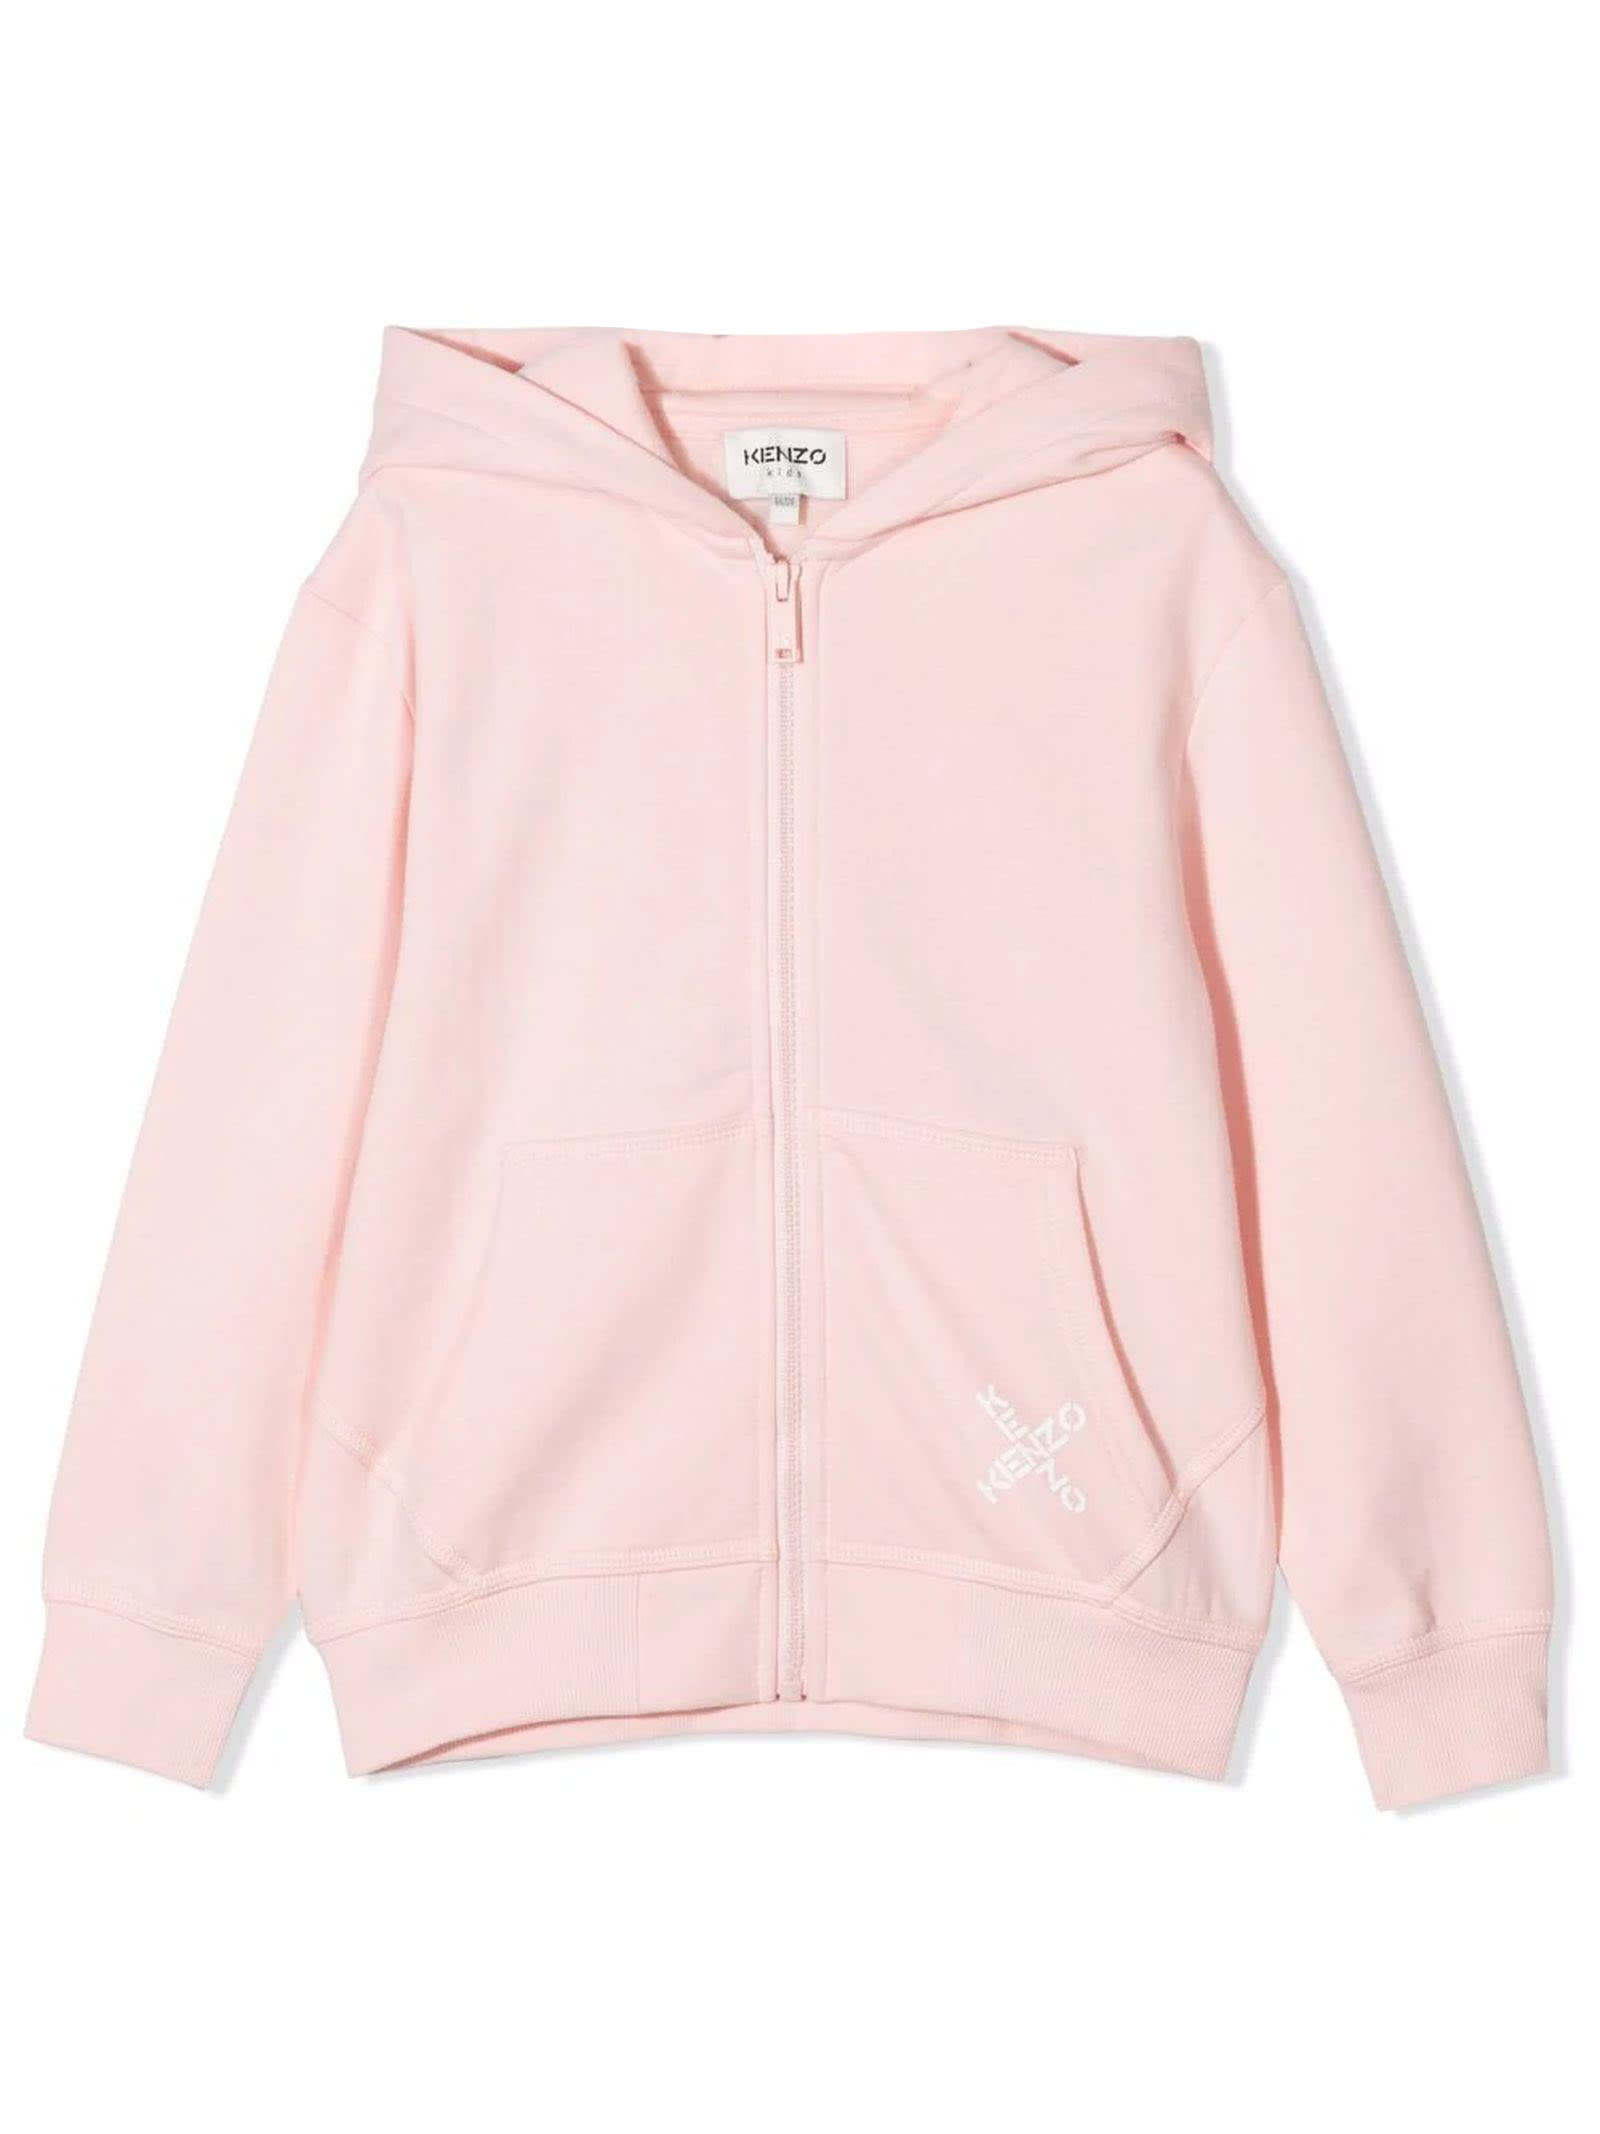 Kenzo Light Pink Cotton-blend Jacket